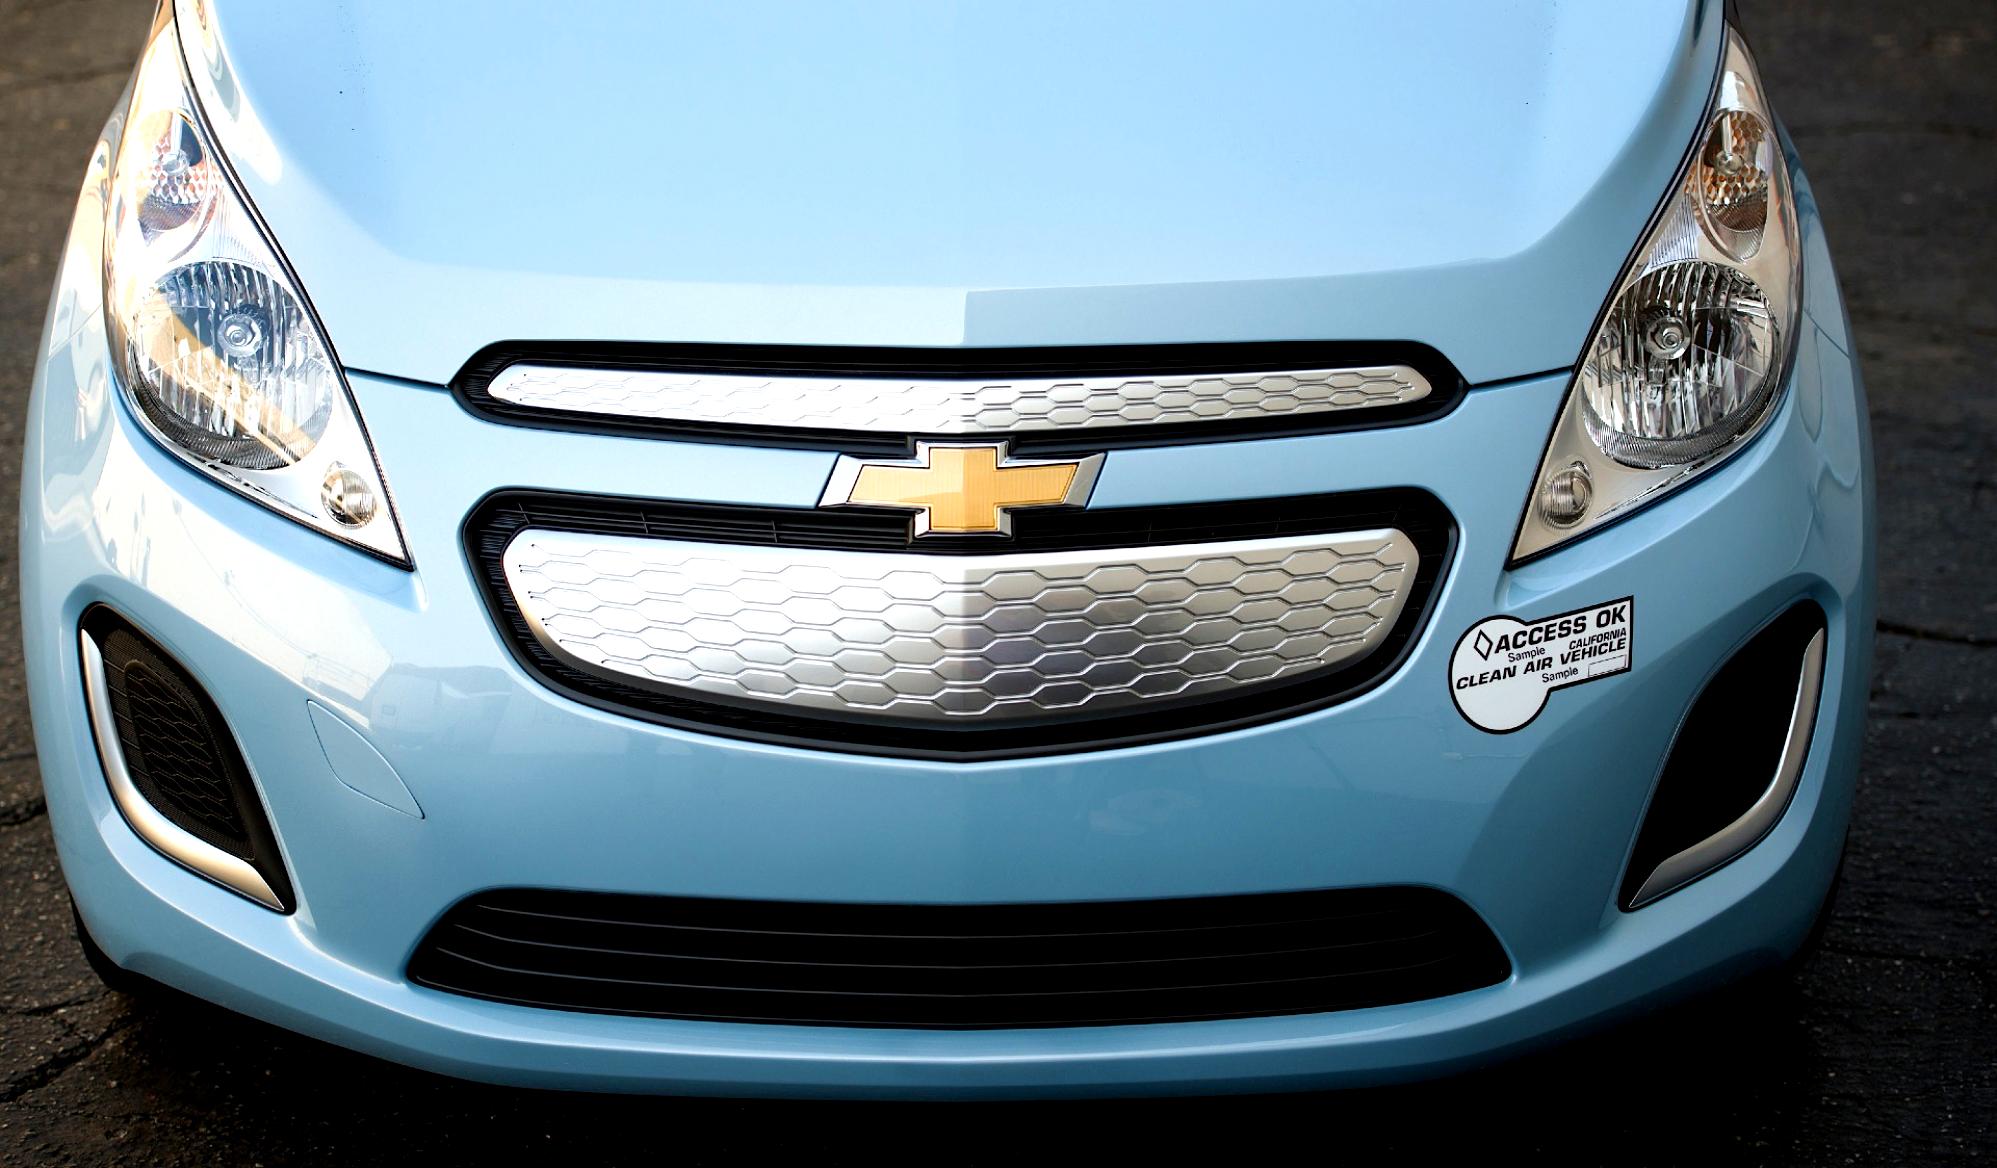 Chevrolet Spark EV 2013 #20